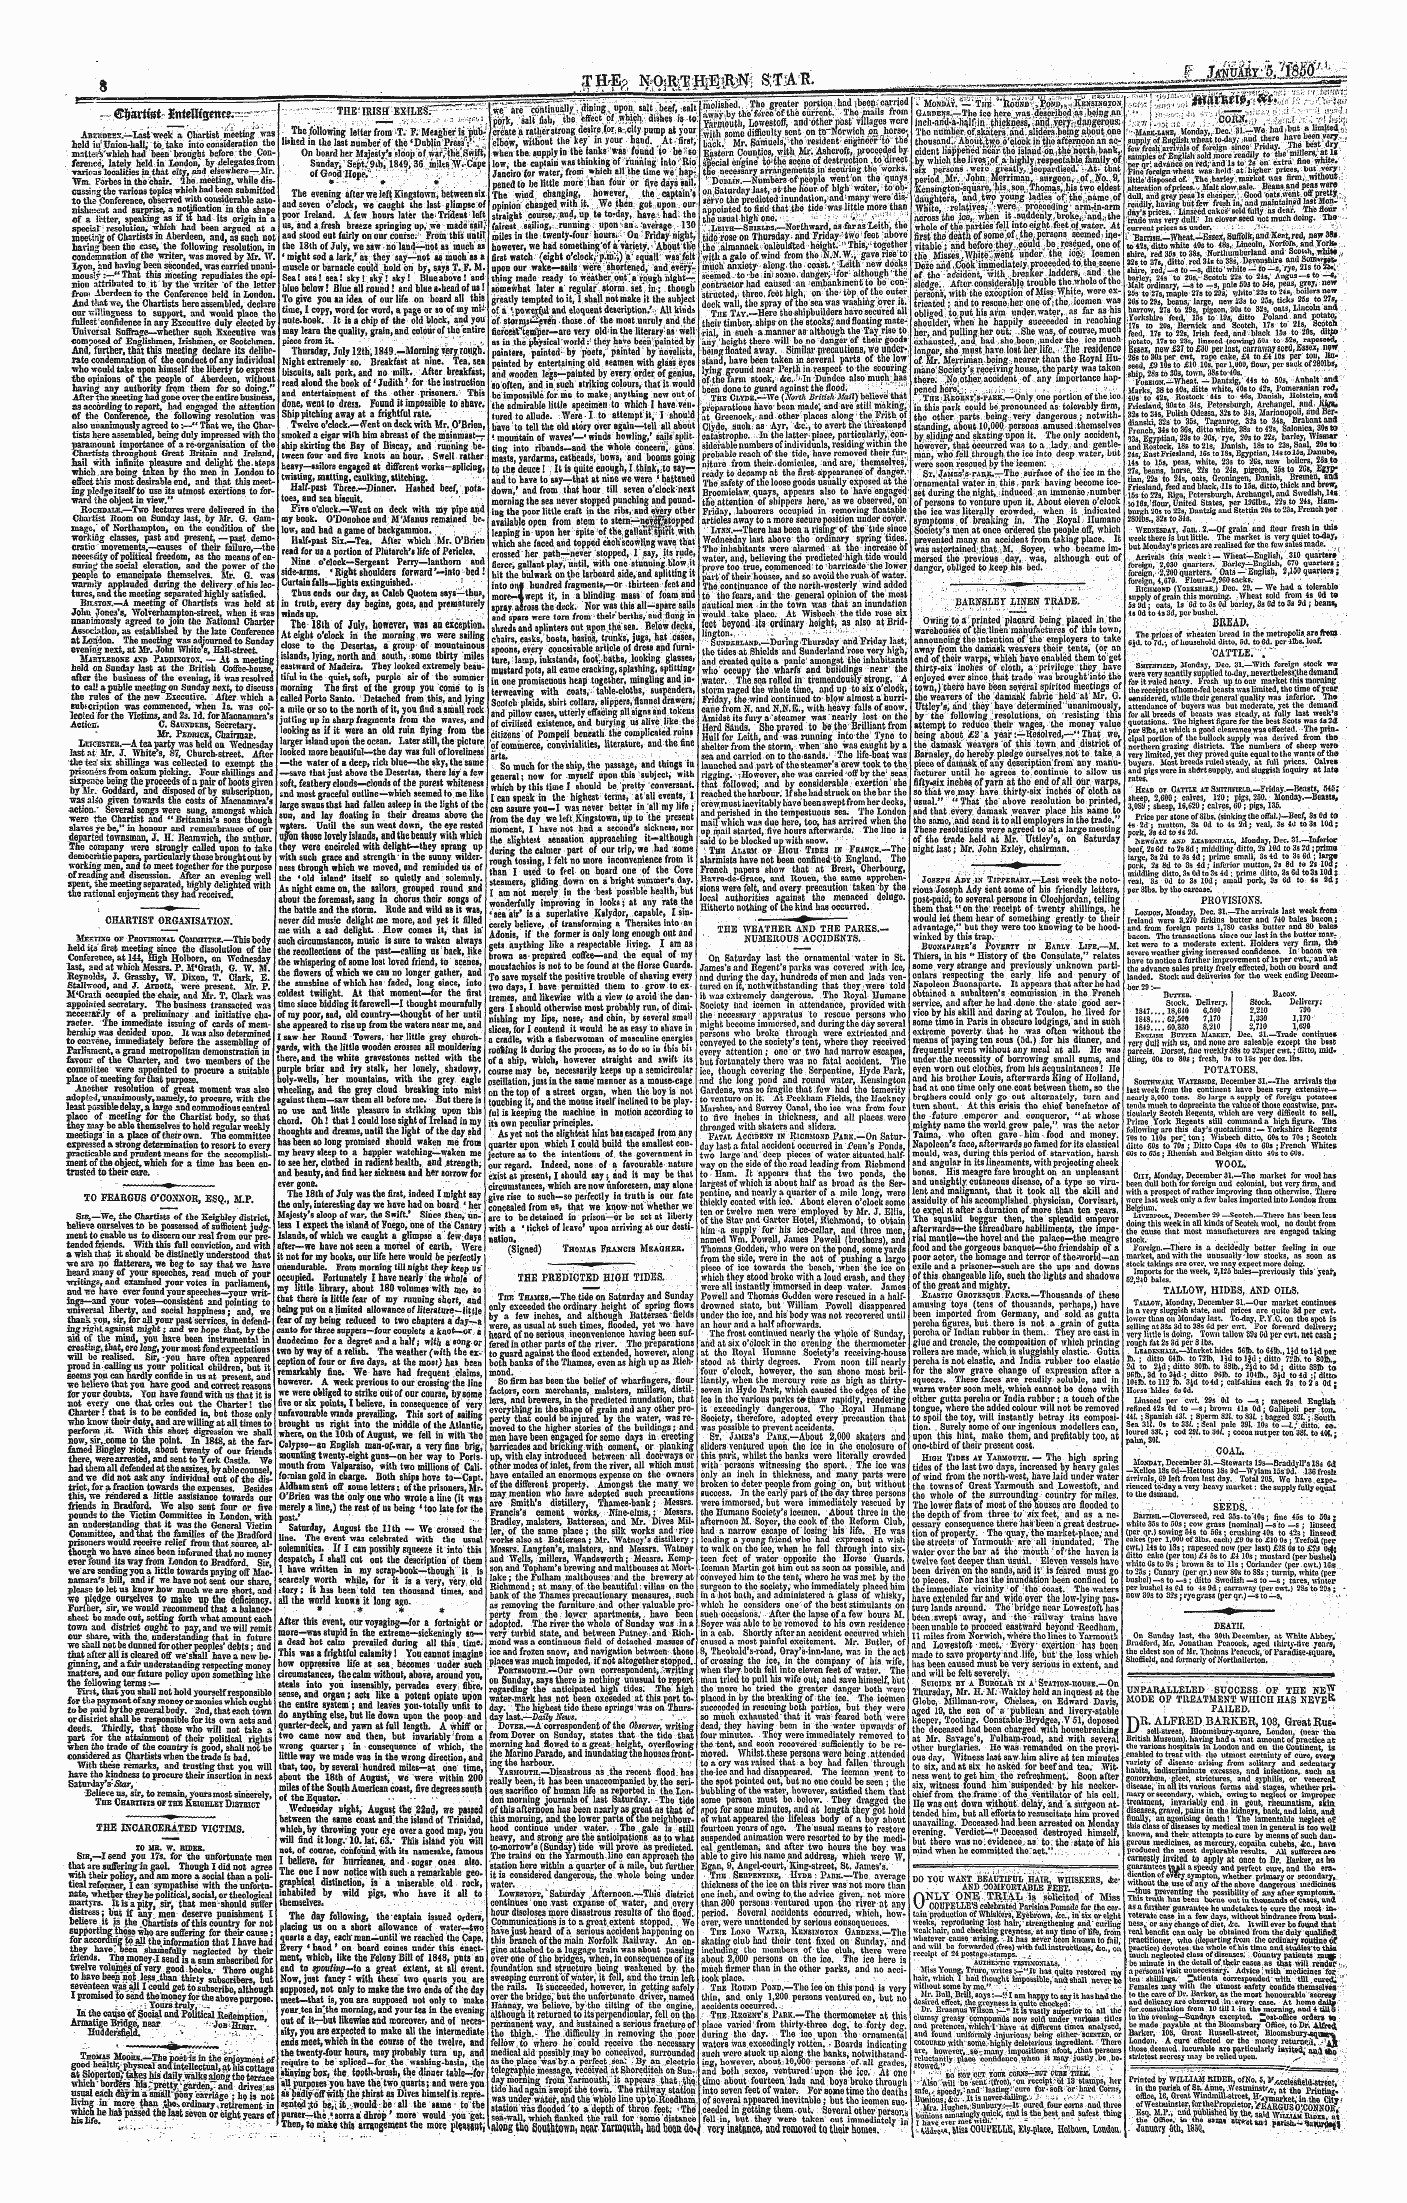 Northern Star (1837-1852): jS F Y, 1st edition - Iiuo 10vi H Amish Uiuiuivi P V^W#$?E^^'S L V *^^